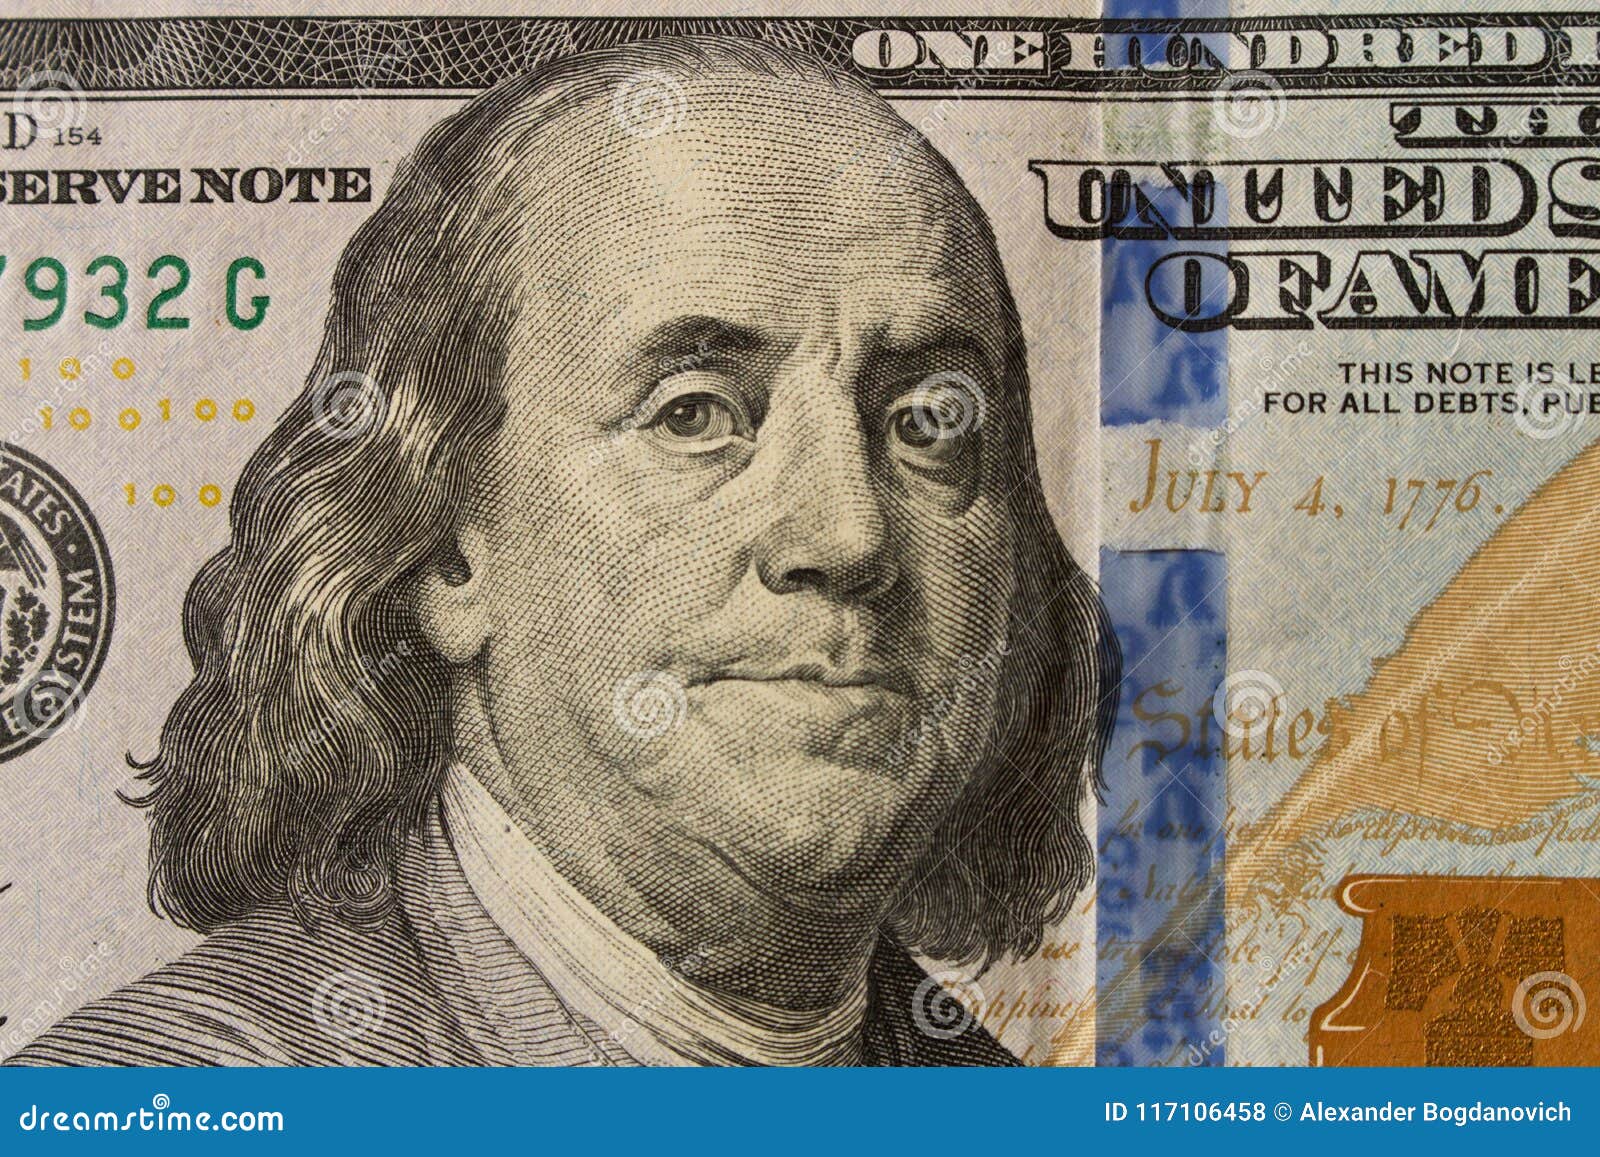 Франклин на какой купюре. Доллар Бенджамин Франклин купюра. Бенджамин Франклин 100$. Франклин 100 долларов. Бенджамин Франклин 100$ золотой.